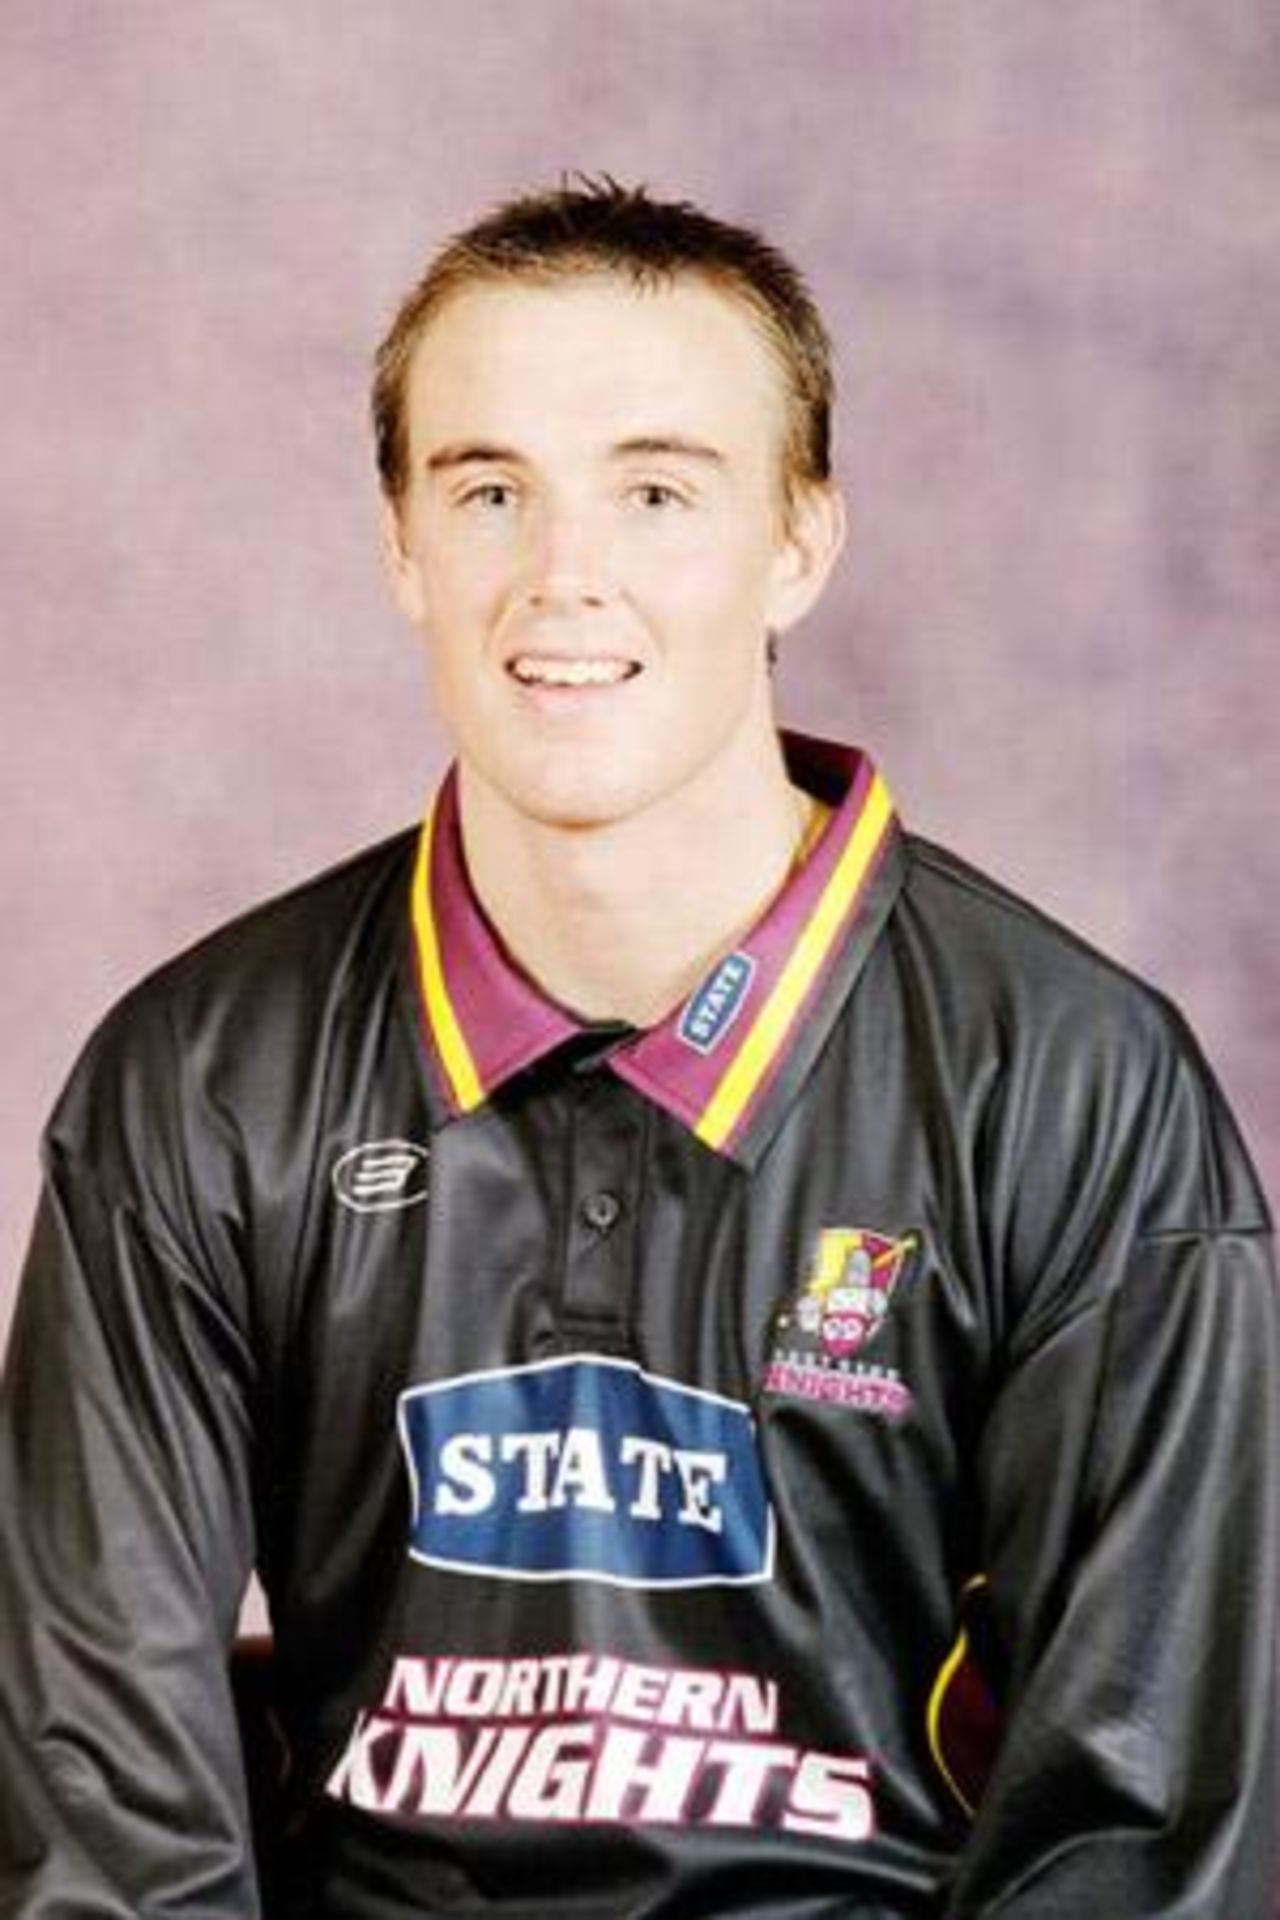 Portrait of Graeme Aldridge, Northern Districts player in the 2001/02 season.